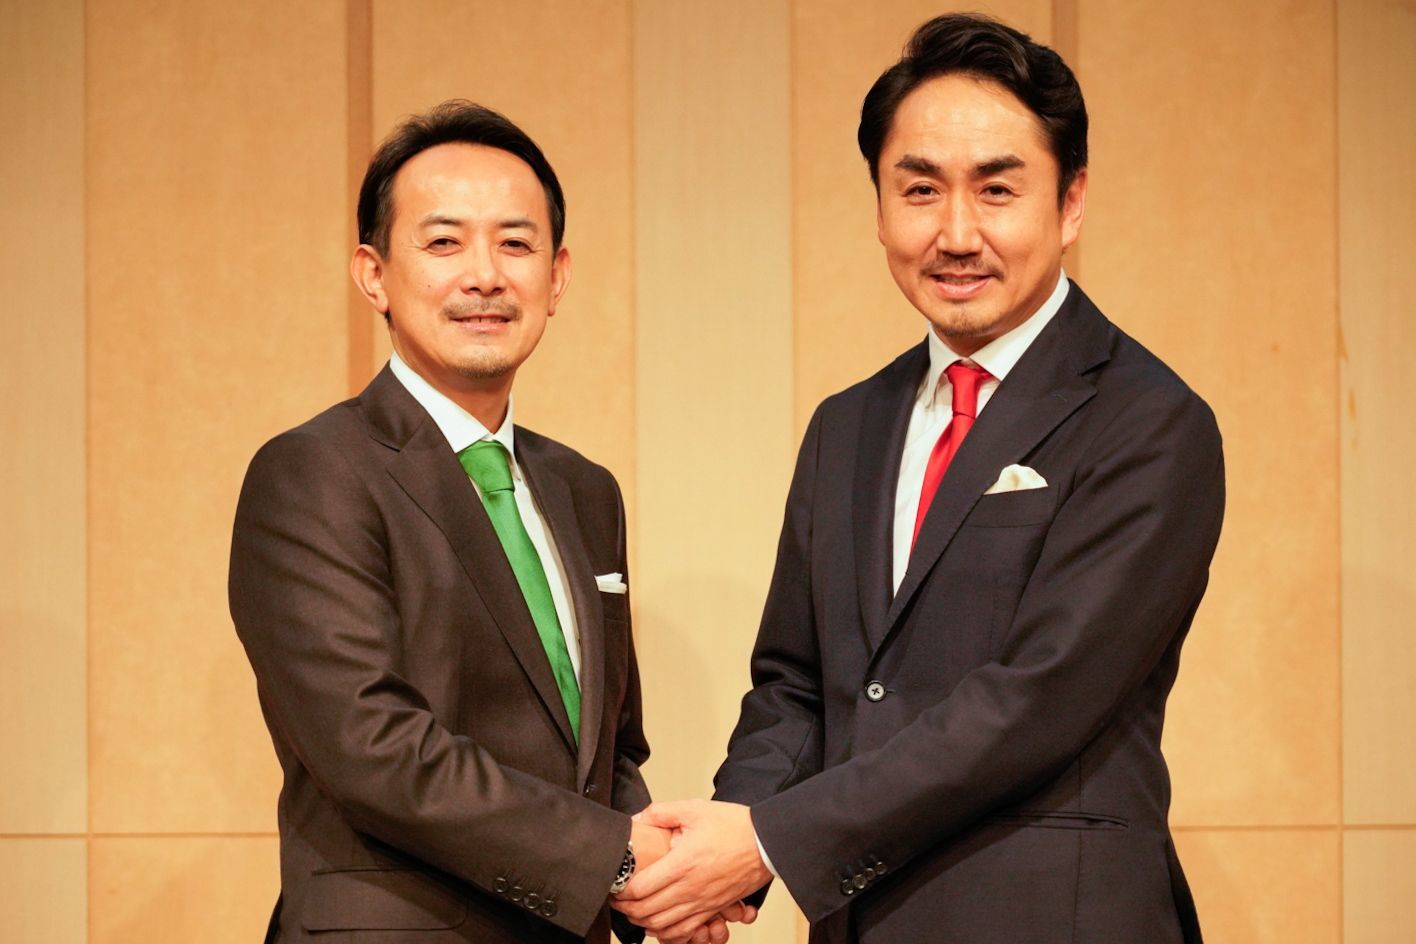 Zホールディングス代表取締役社長の川邊健太郎氏と握手する出澤氏（2019年11月撮影）